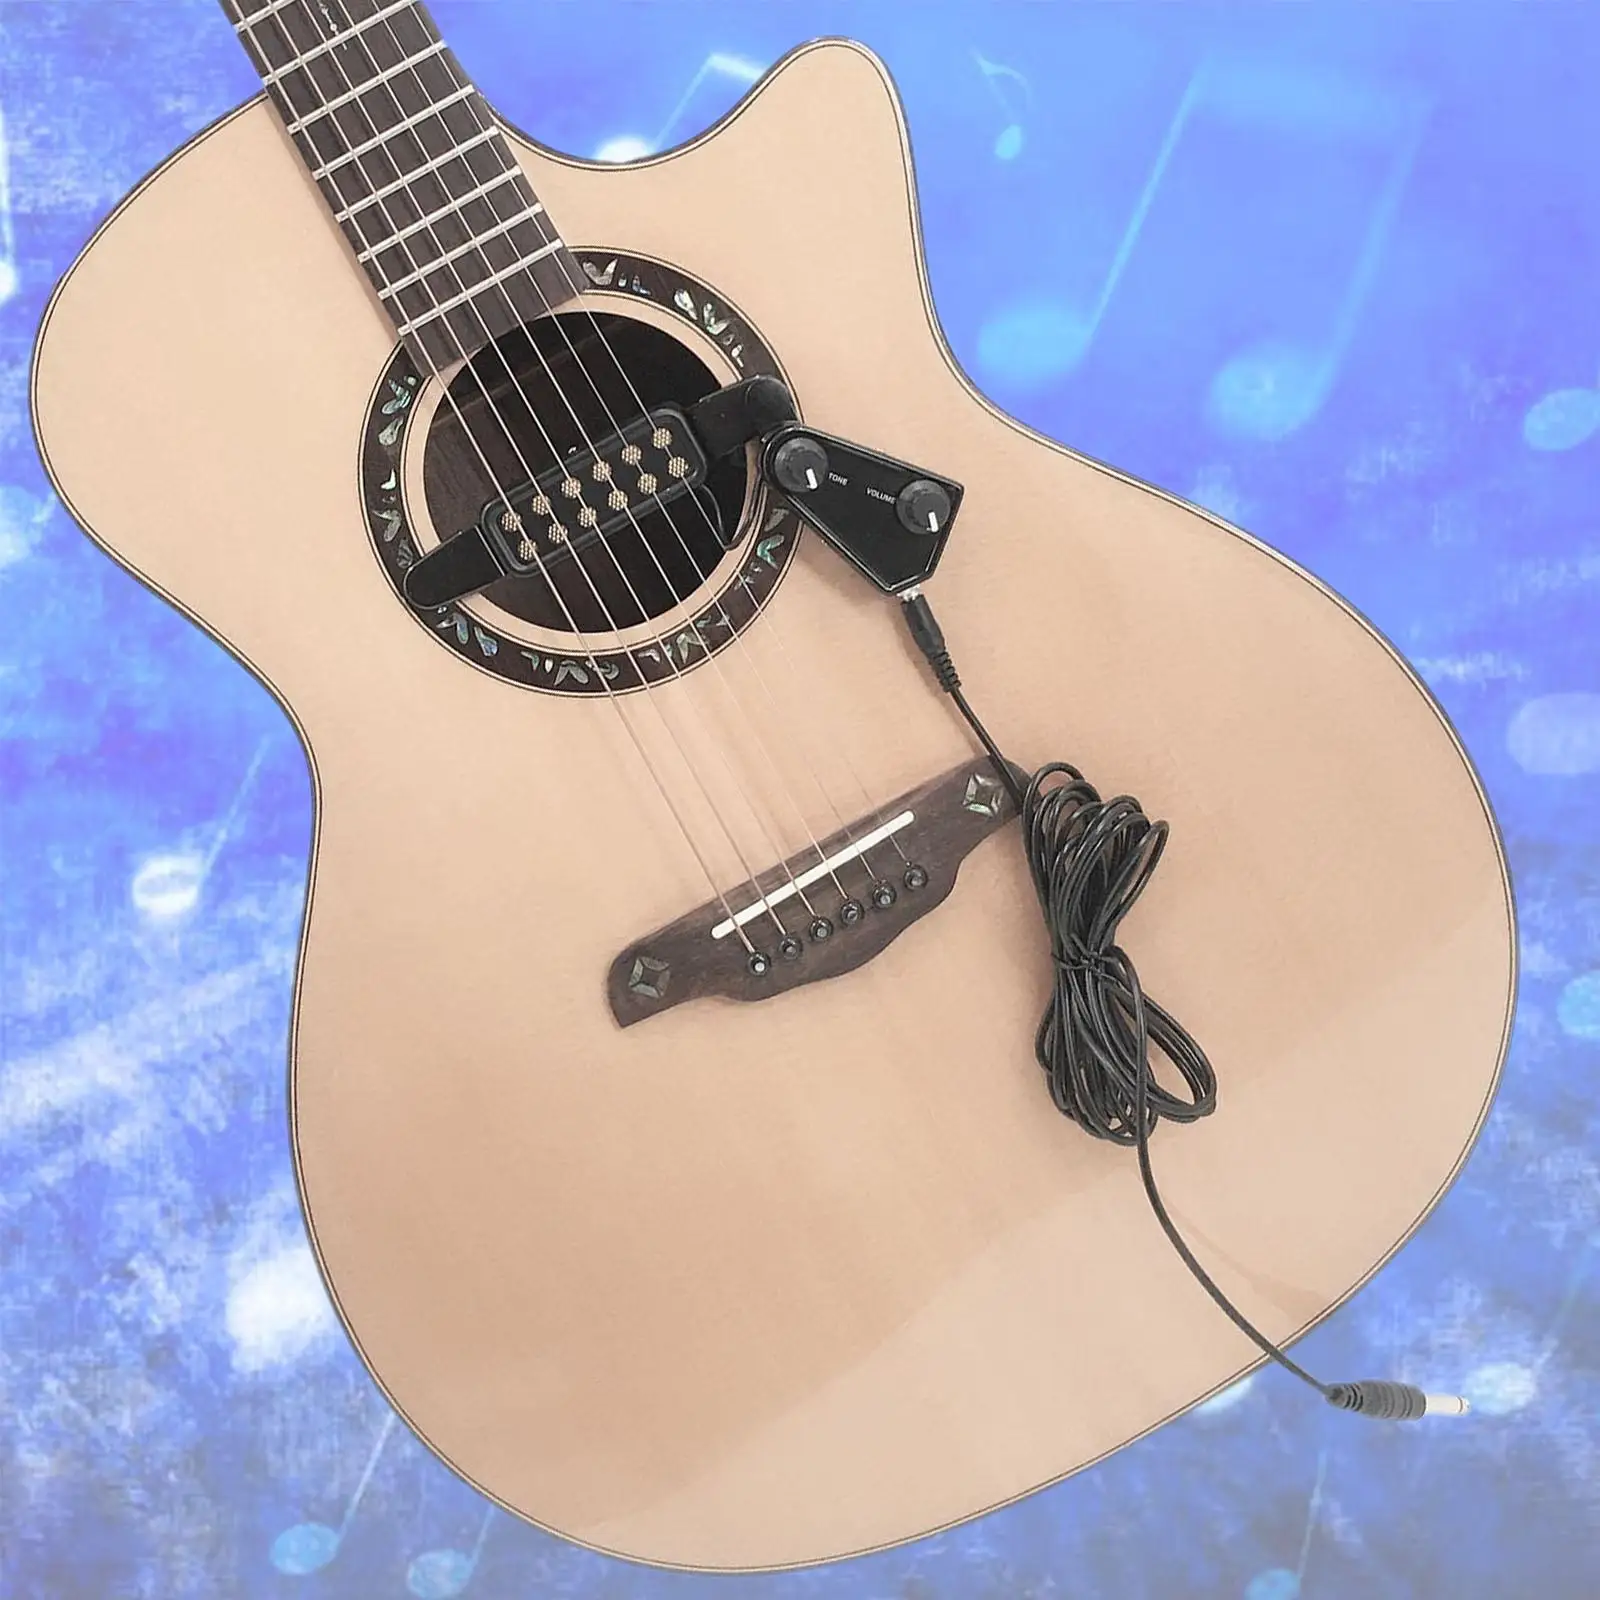 Professional Bridge Pickup Violin Accessories with Volume Knob and Volume Acoustic Guitar Pickup Guitar Bridge Pickup